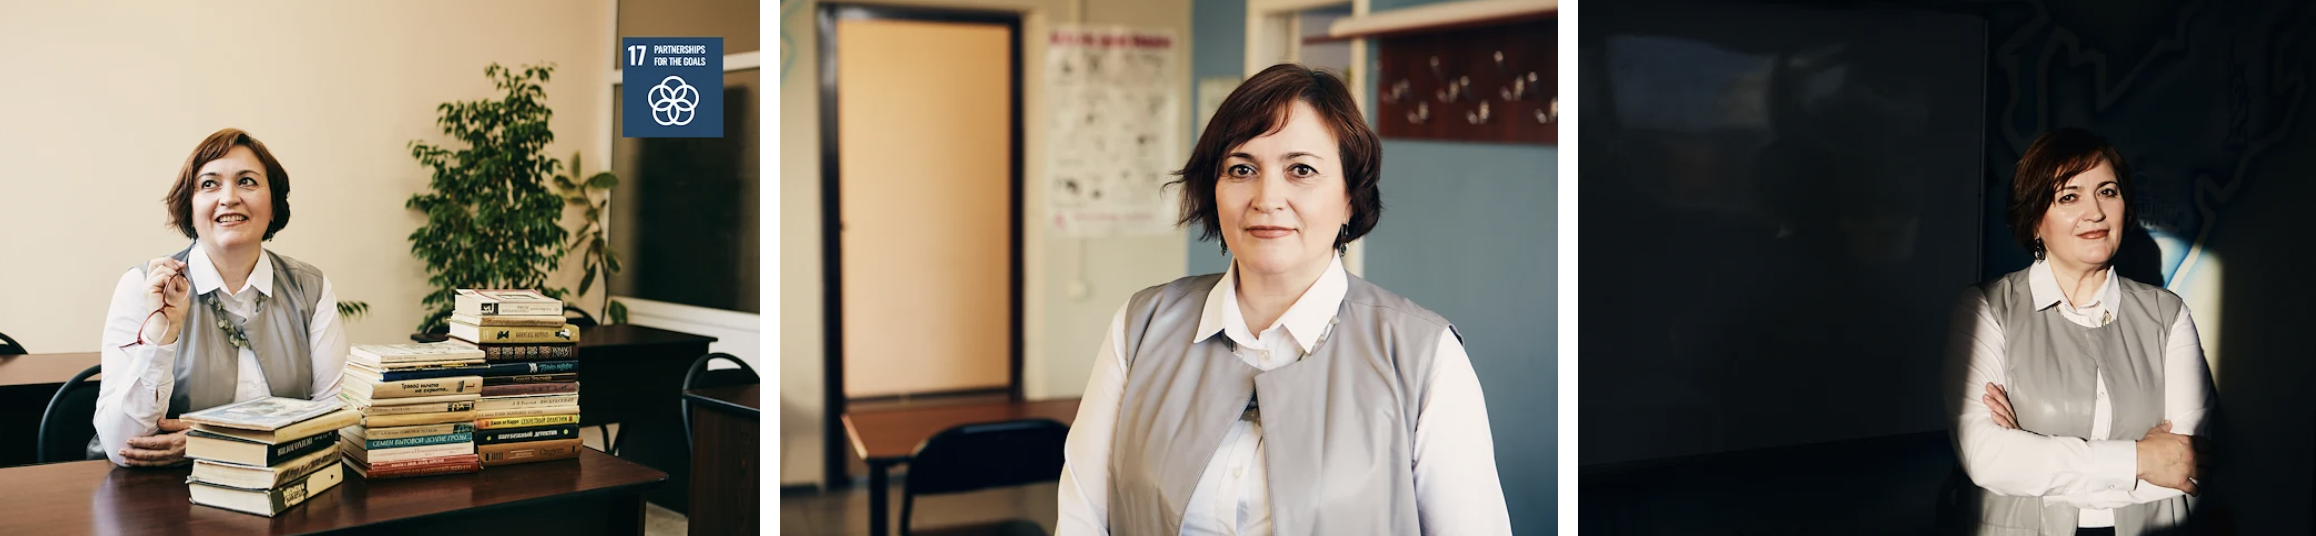 Larissa Khlopayeva, Coordinator of the “Silver Volunteering” project in Pavlodar